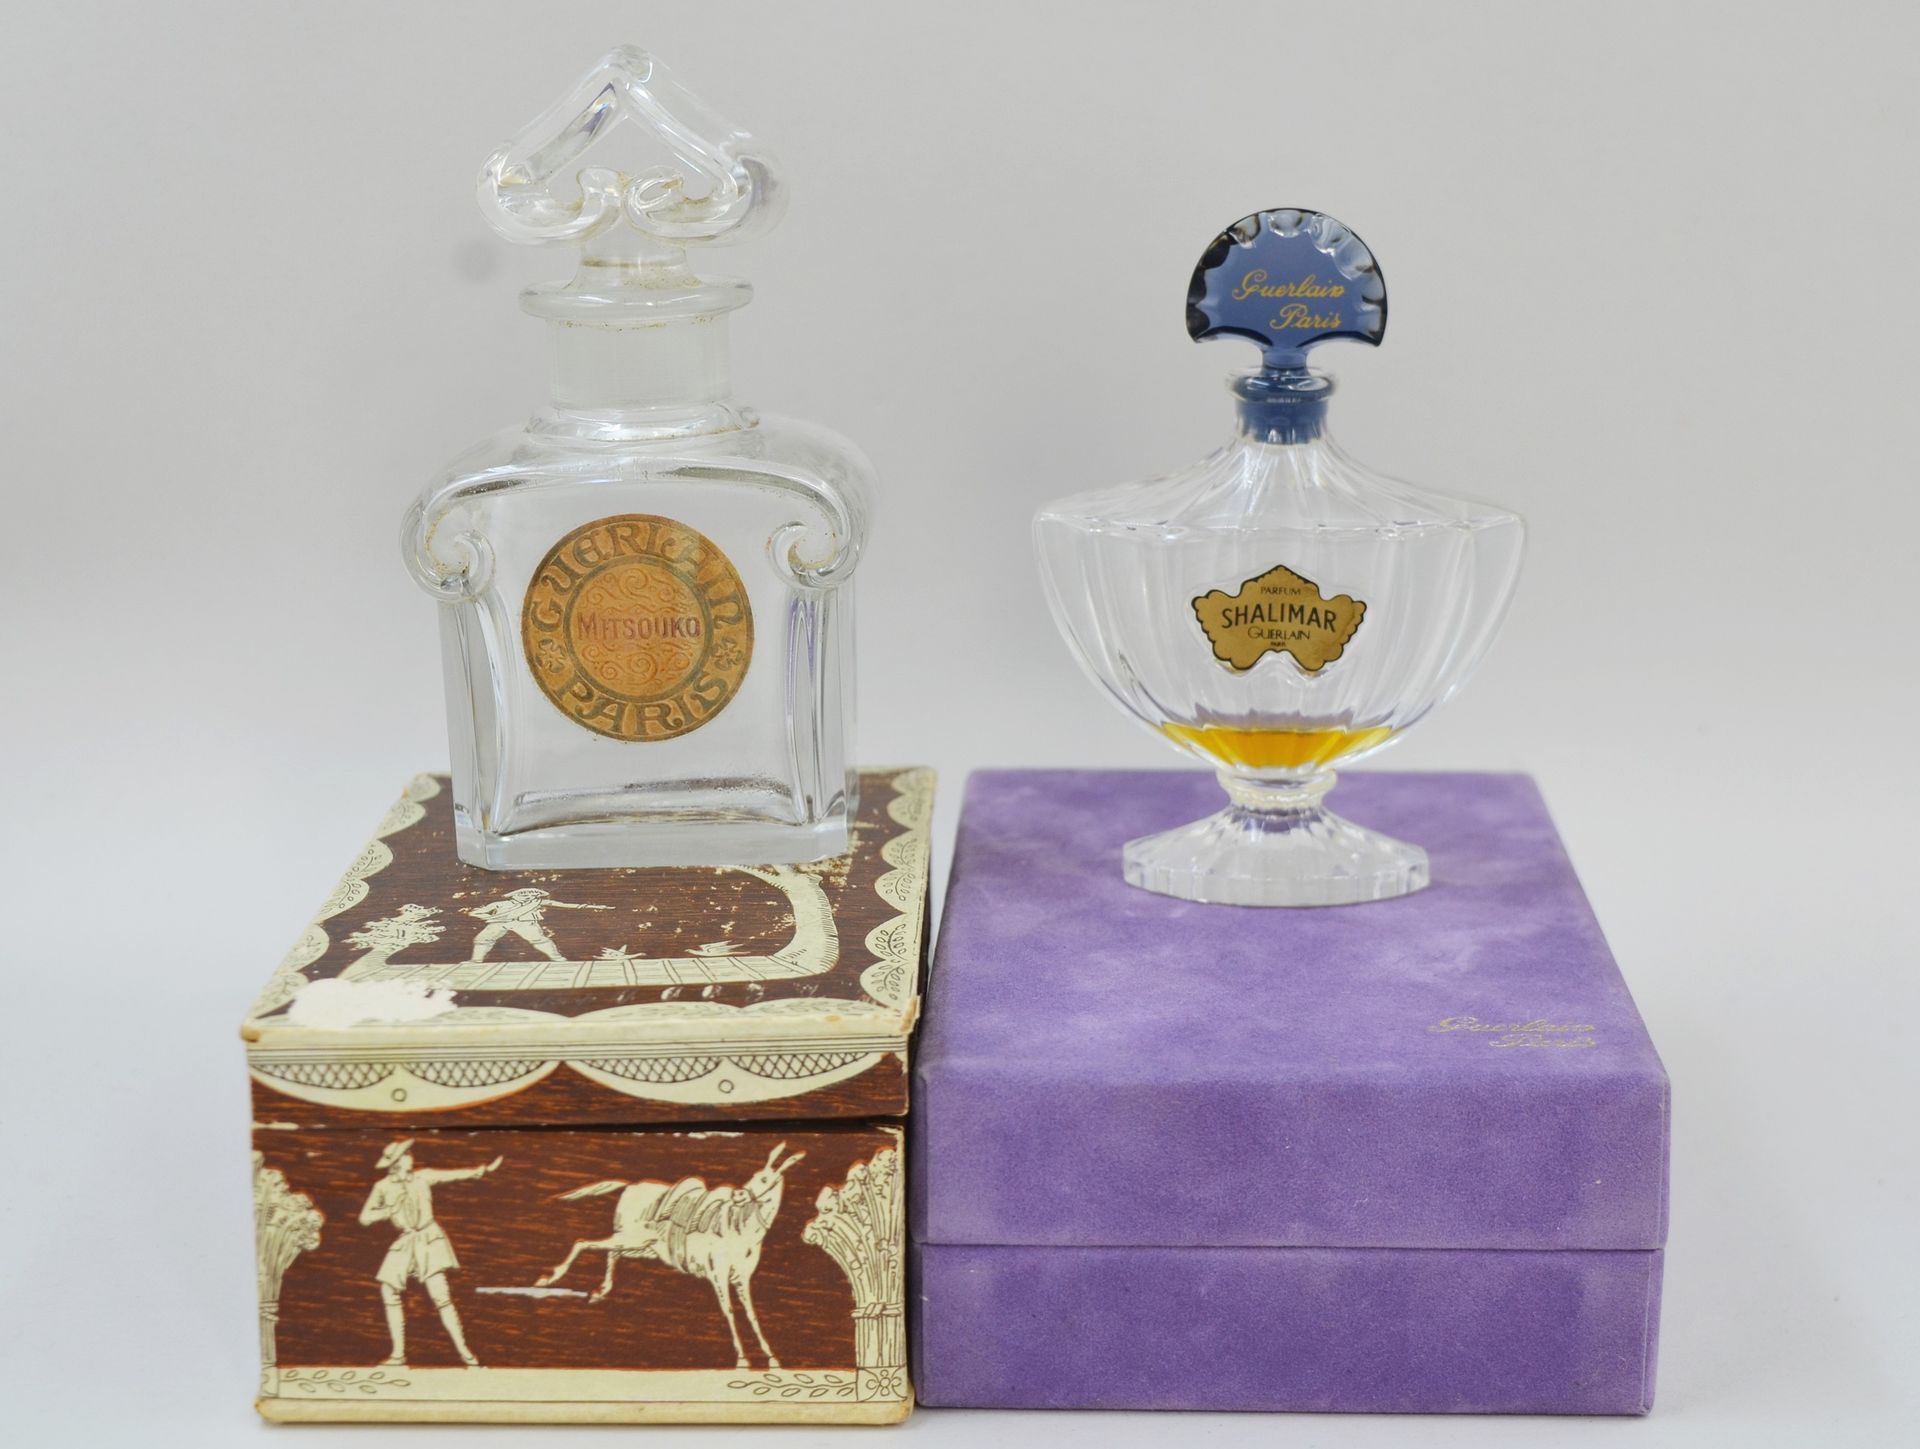 Null 
顾尔伦

拍品包括两个巴卡拉水晶瓶。

一个MITSOUKO的 "心脏 "模型，装在有标题的盒子里，和一个SHALIMAR的 "风扇 "模型，装在天&hellip;